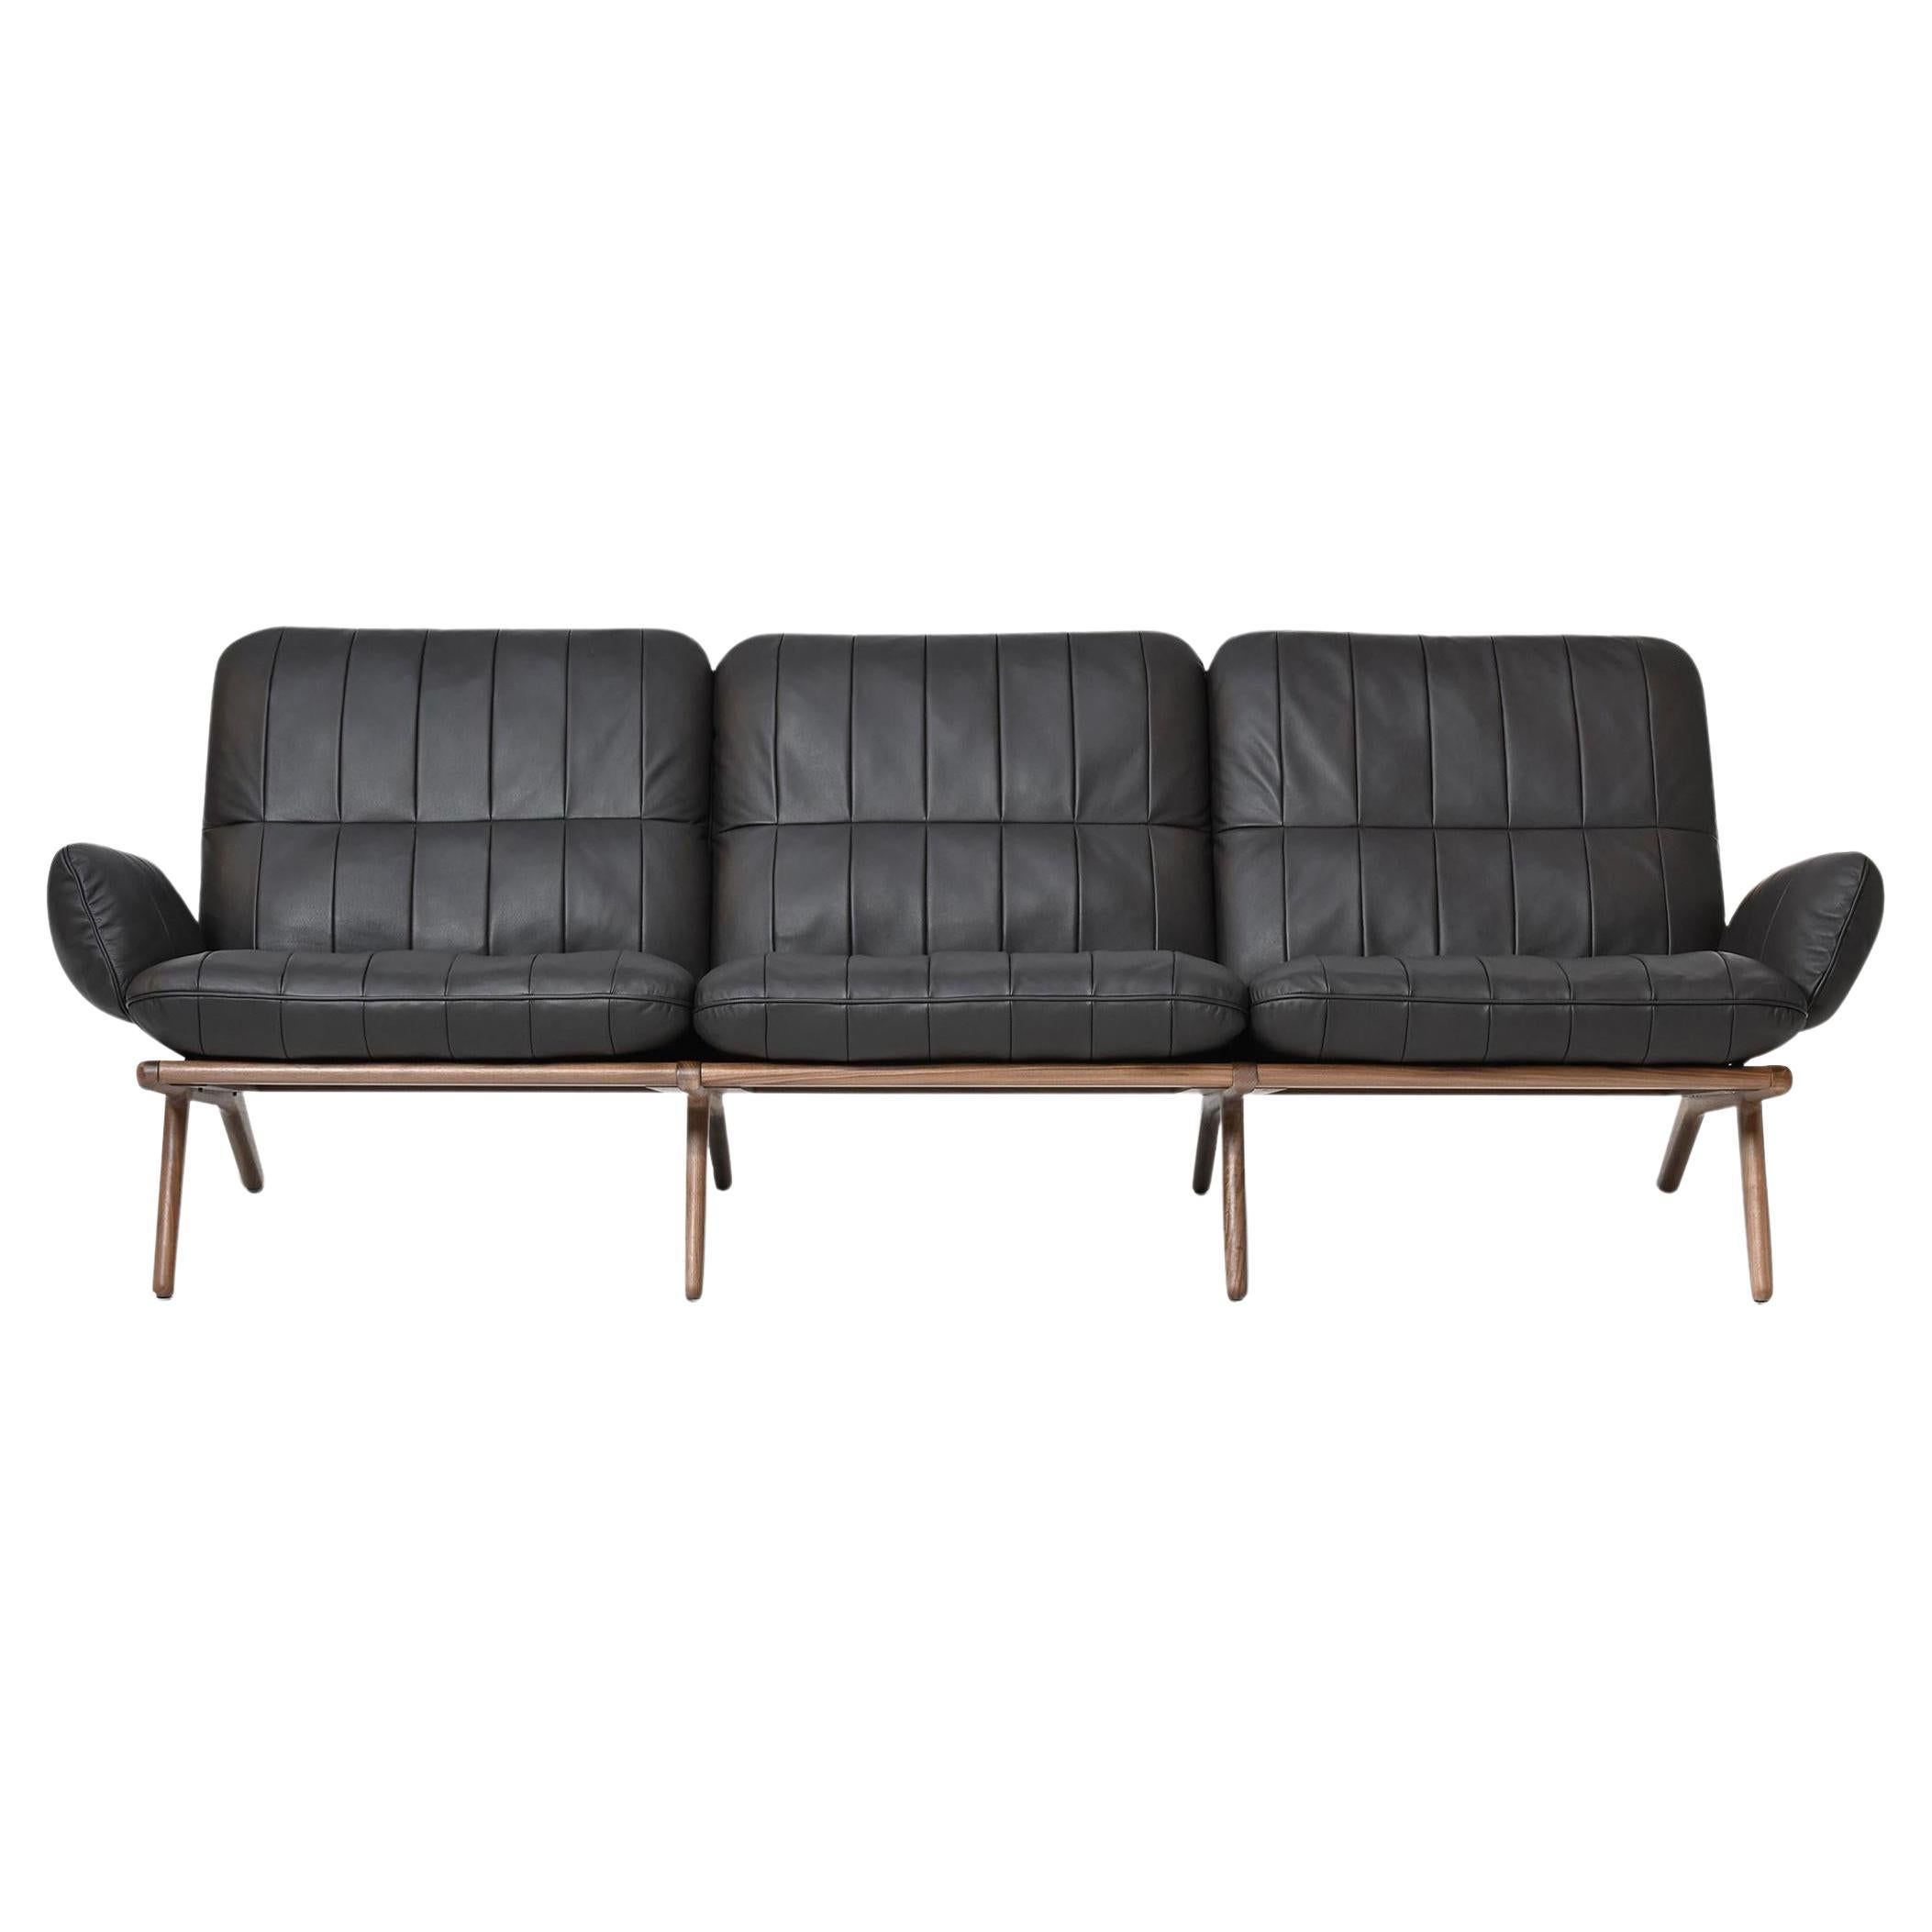 De Sede DS 531 Three-Seat Sofa in Black Upholstery by De Sede Design-Team For Sale